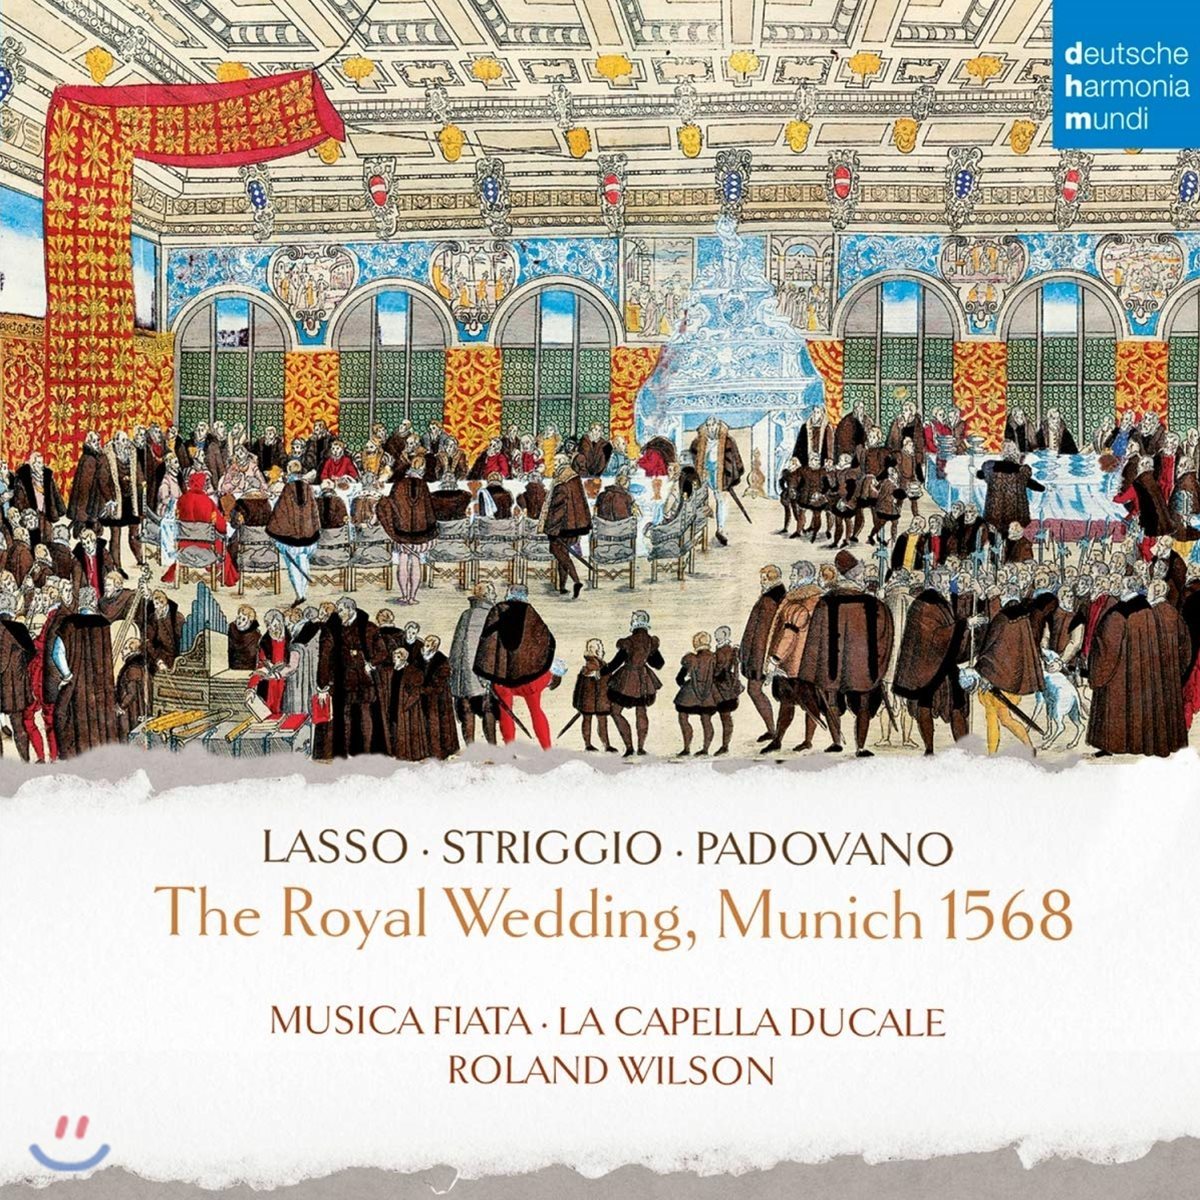 Roland Wilson 1568년 뮌헨 궁정 결혼식 축하를 위한 음악 (The Royal Wedding, Munich 1568)